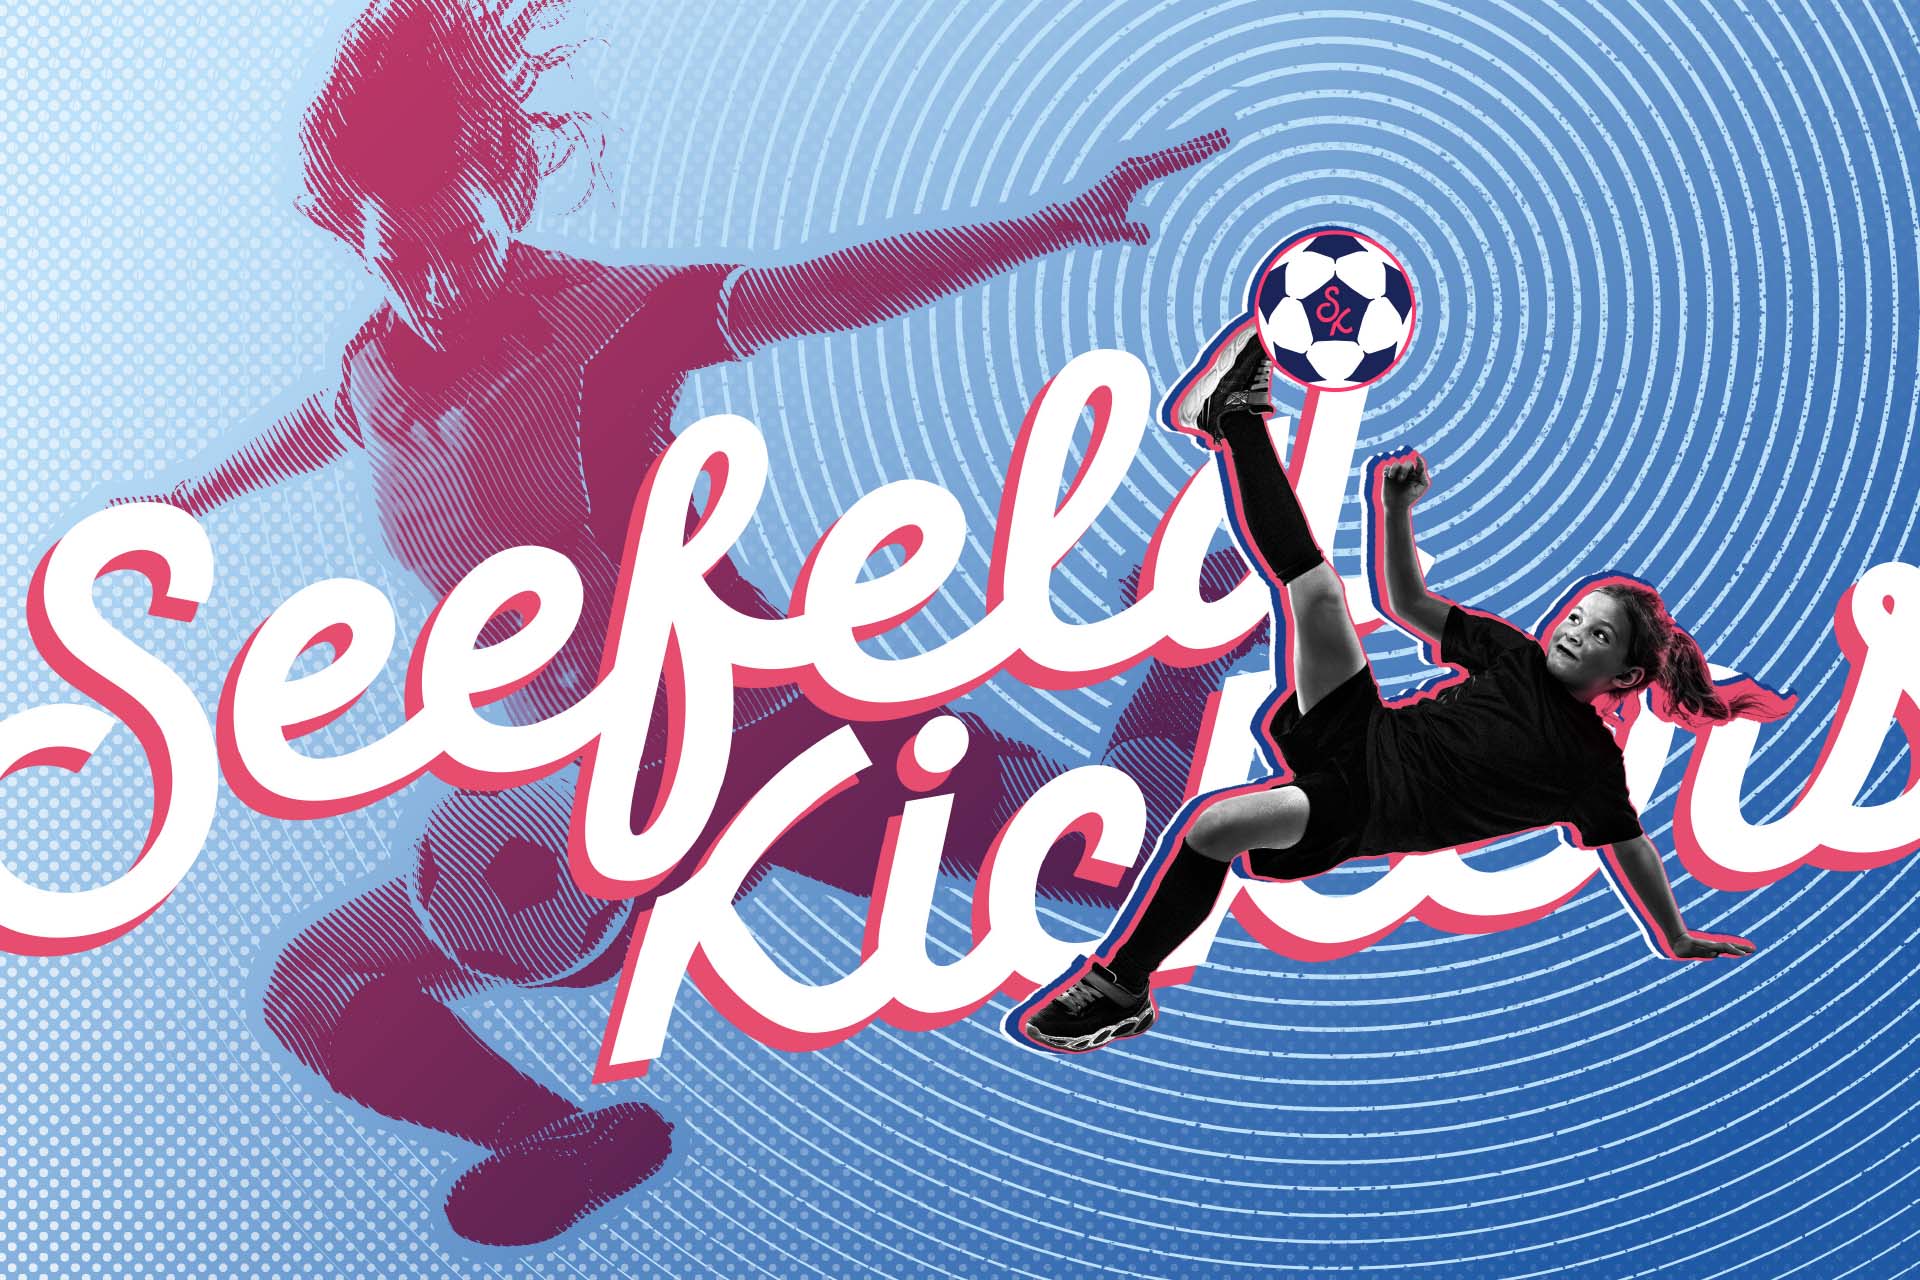 seefeldkickers design female soccer players visual